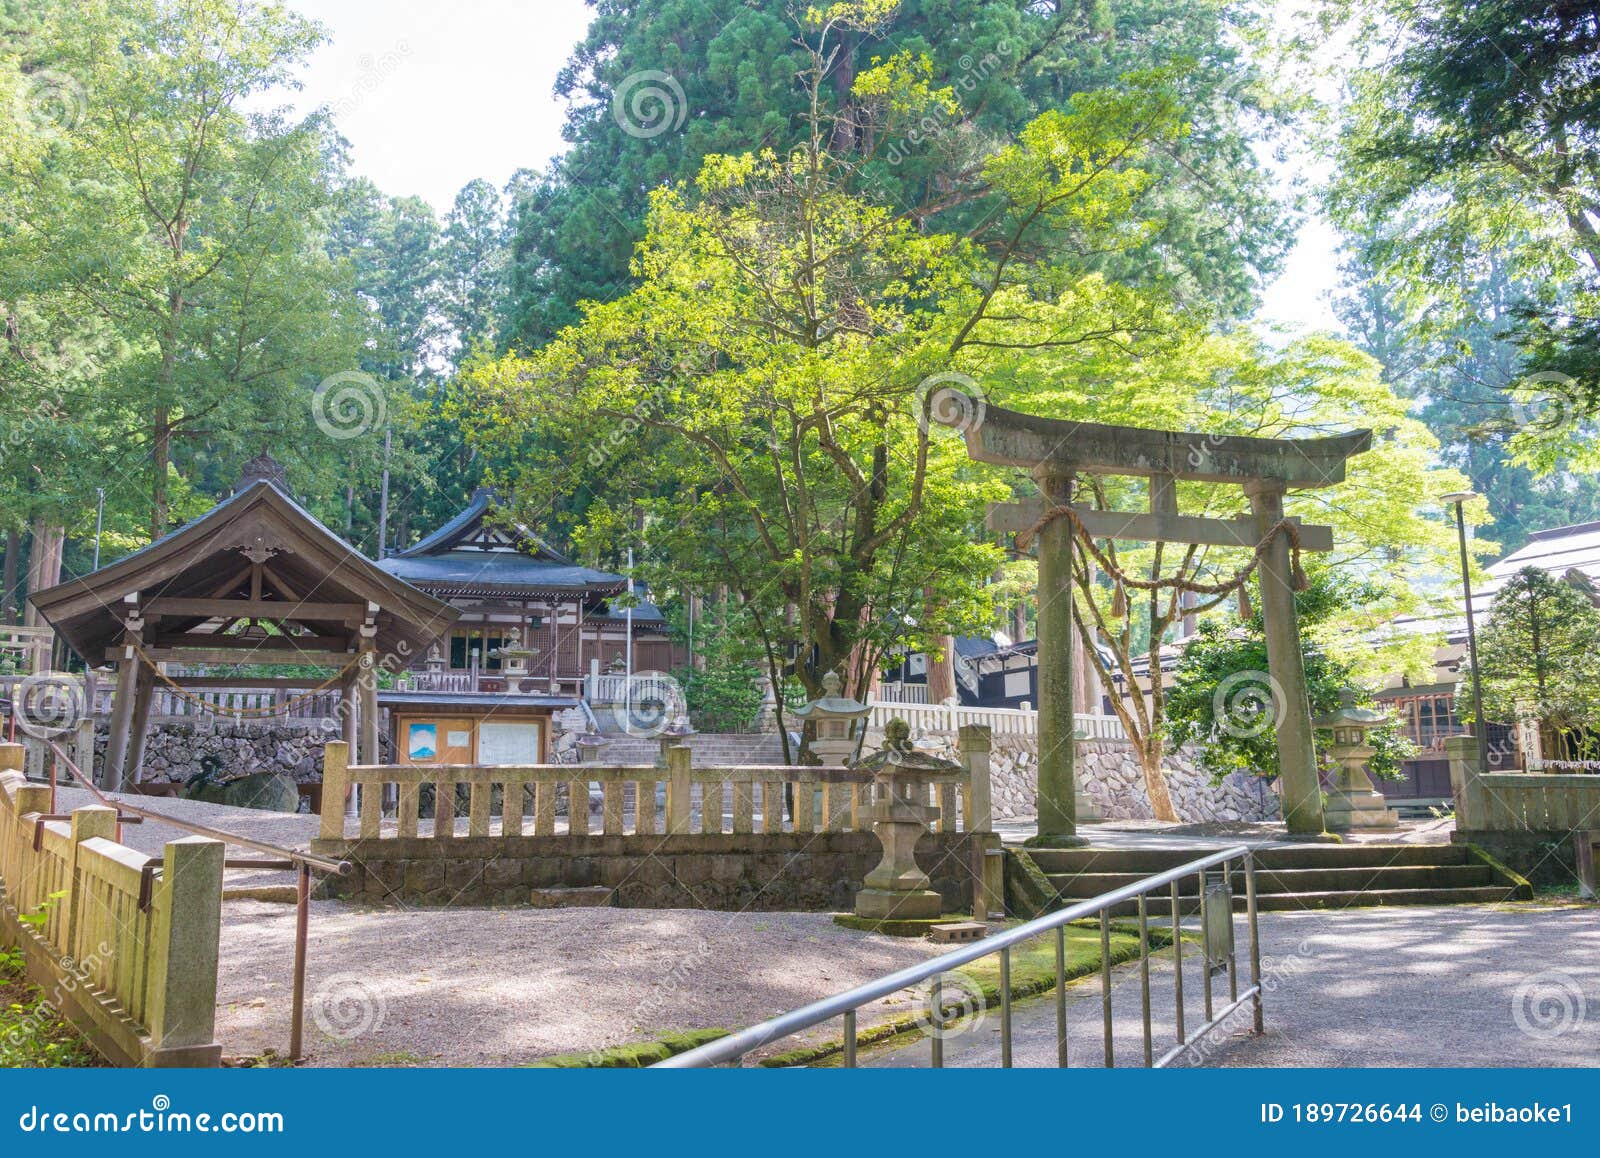 keta wakamiya shrine. a famous historic site in hida, gifu, japan